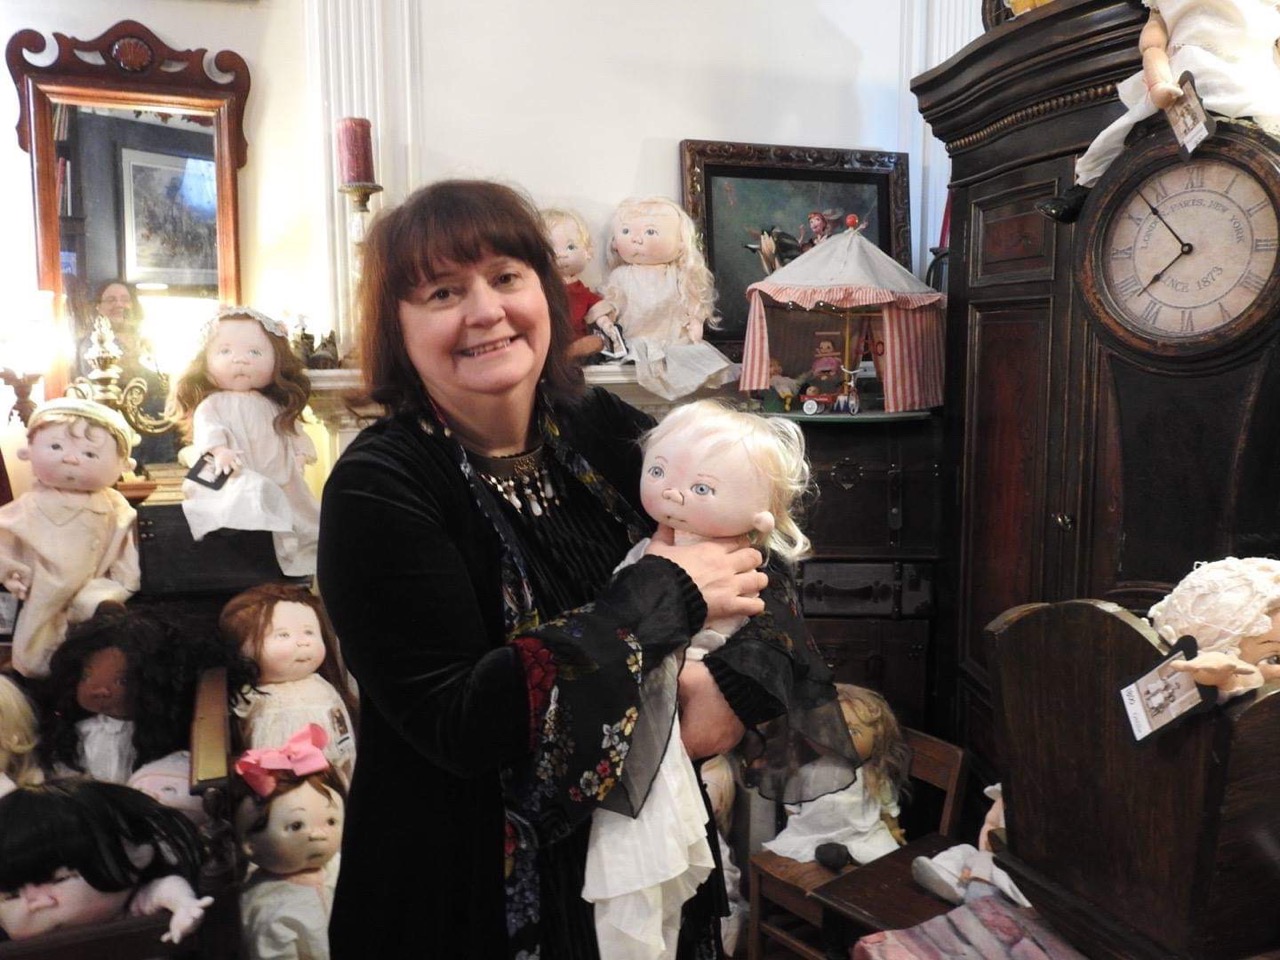 Trussville doll artist sells dolls all over the globe